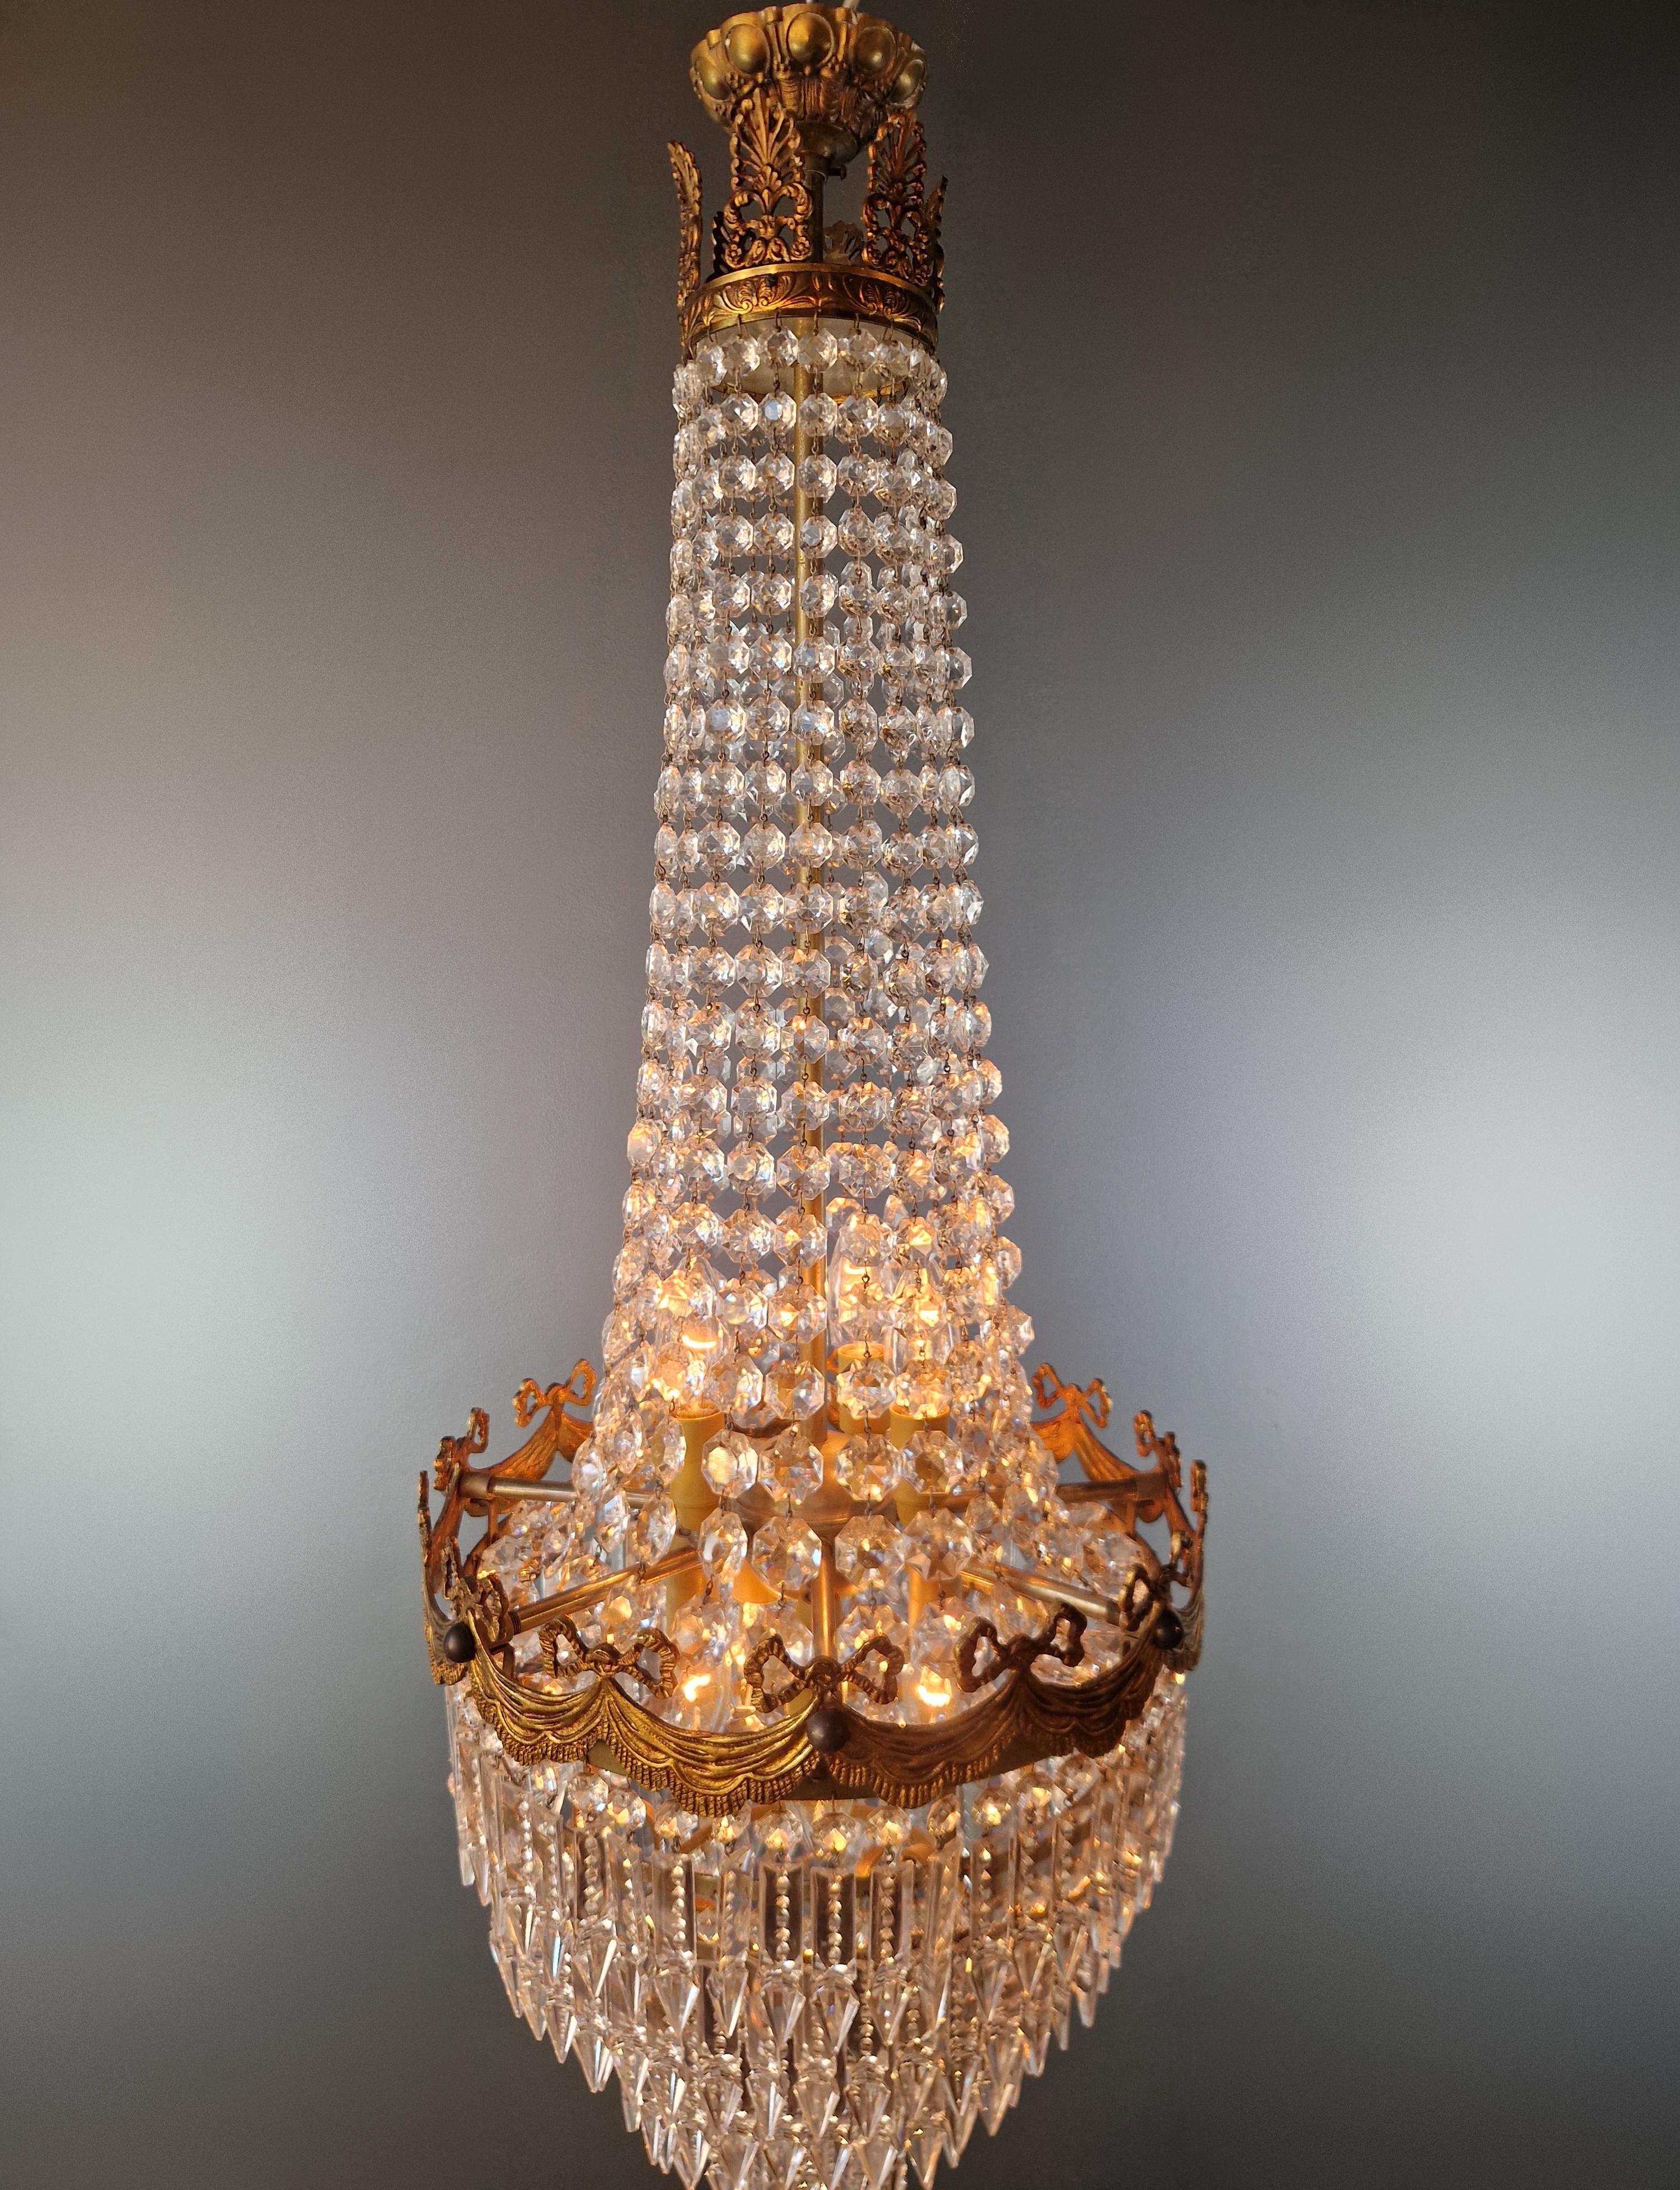 Pair of Antique Crystal Chandelier Ceiling Lamp Lustre Art Nouveau Empire In Good Condition For Sale In Berlin, DE